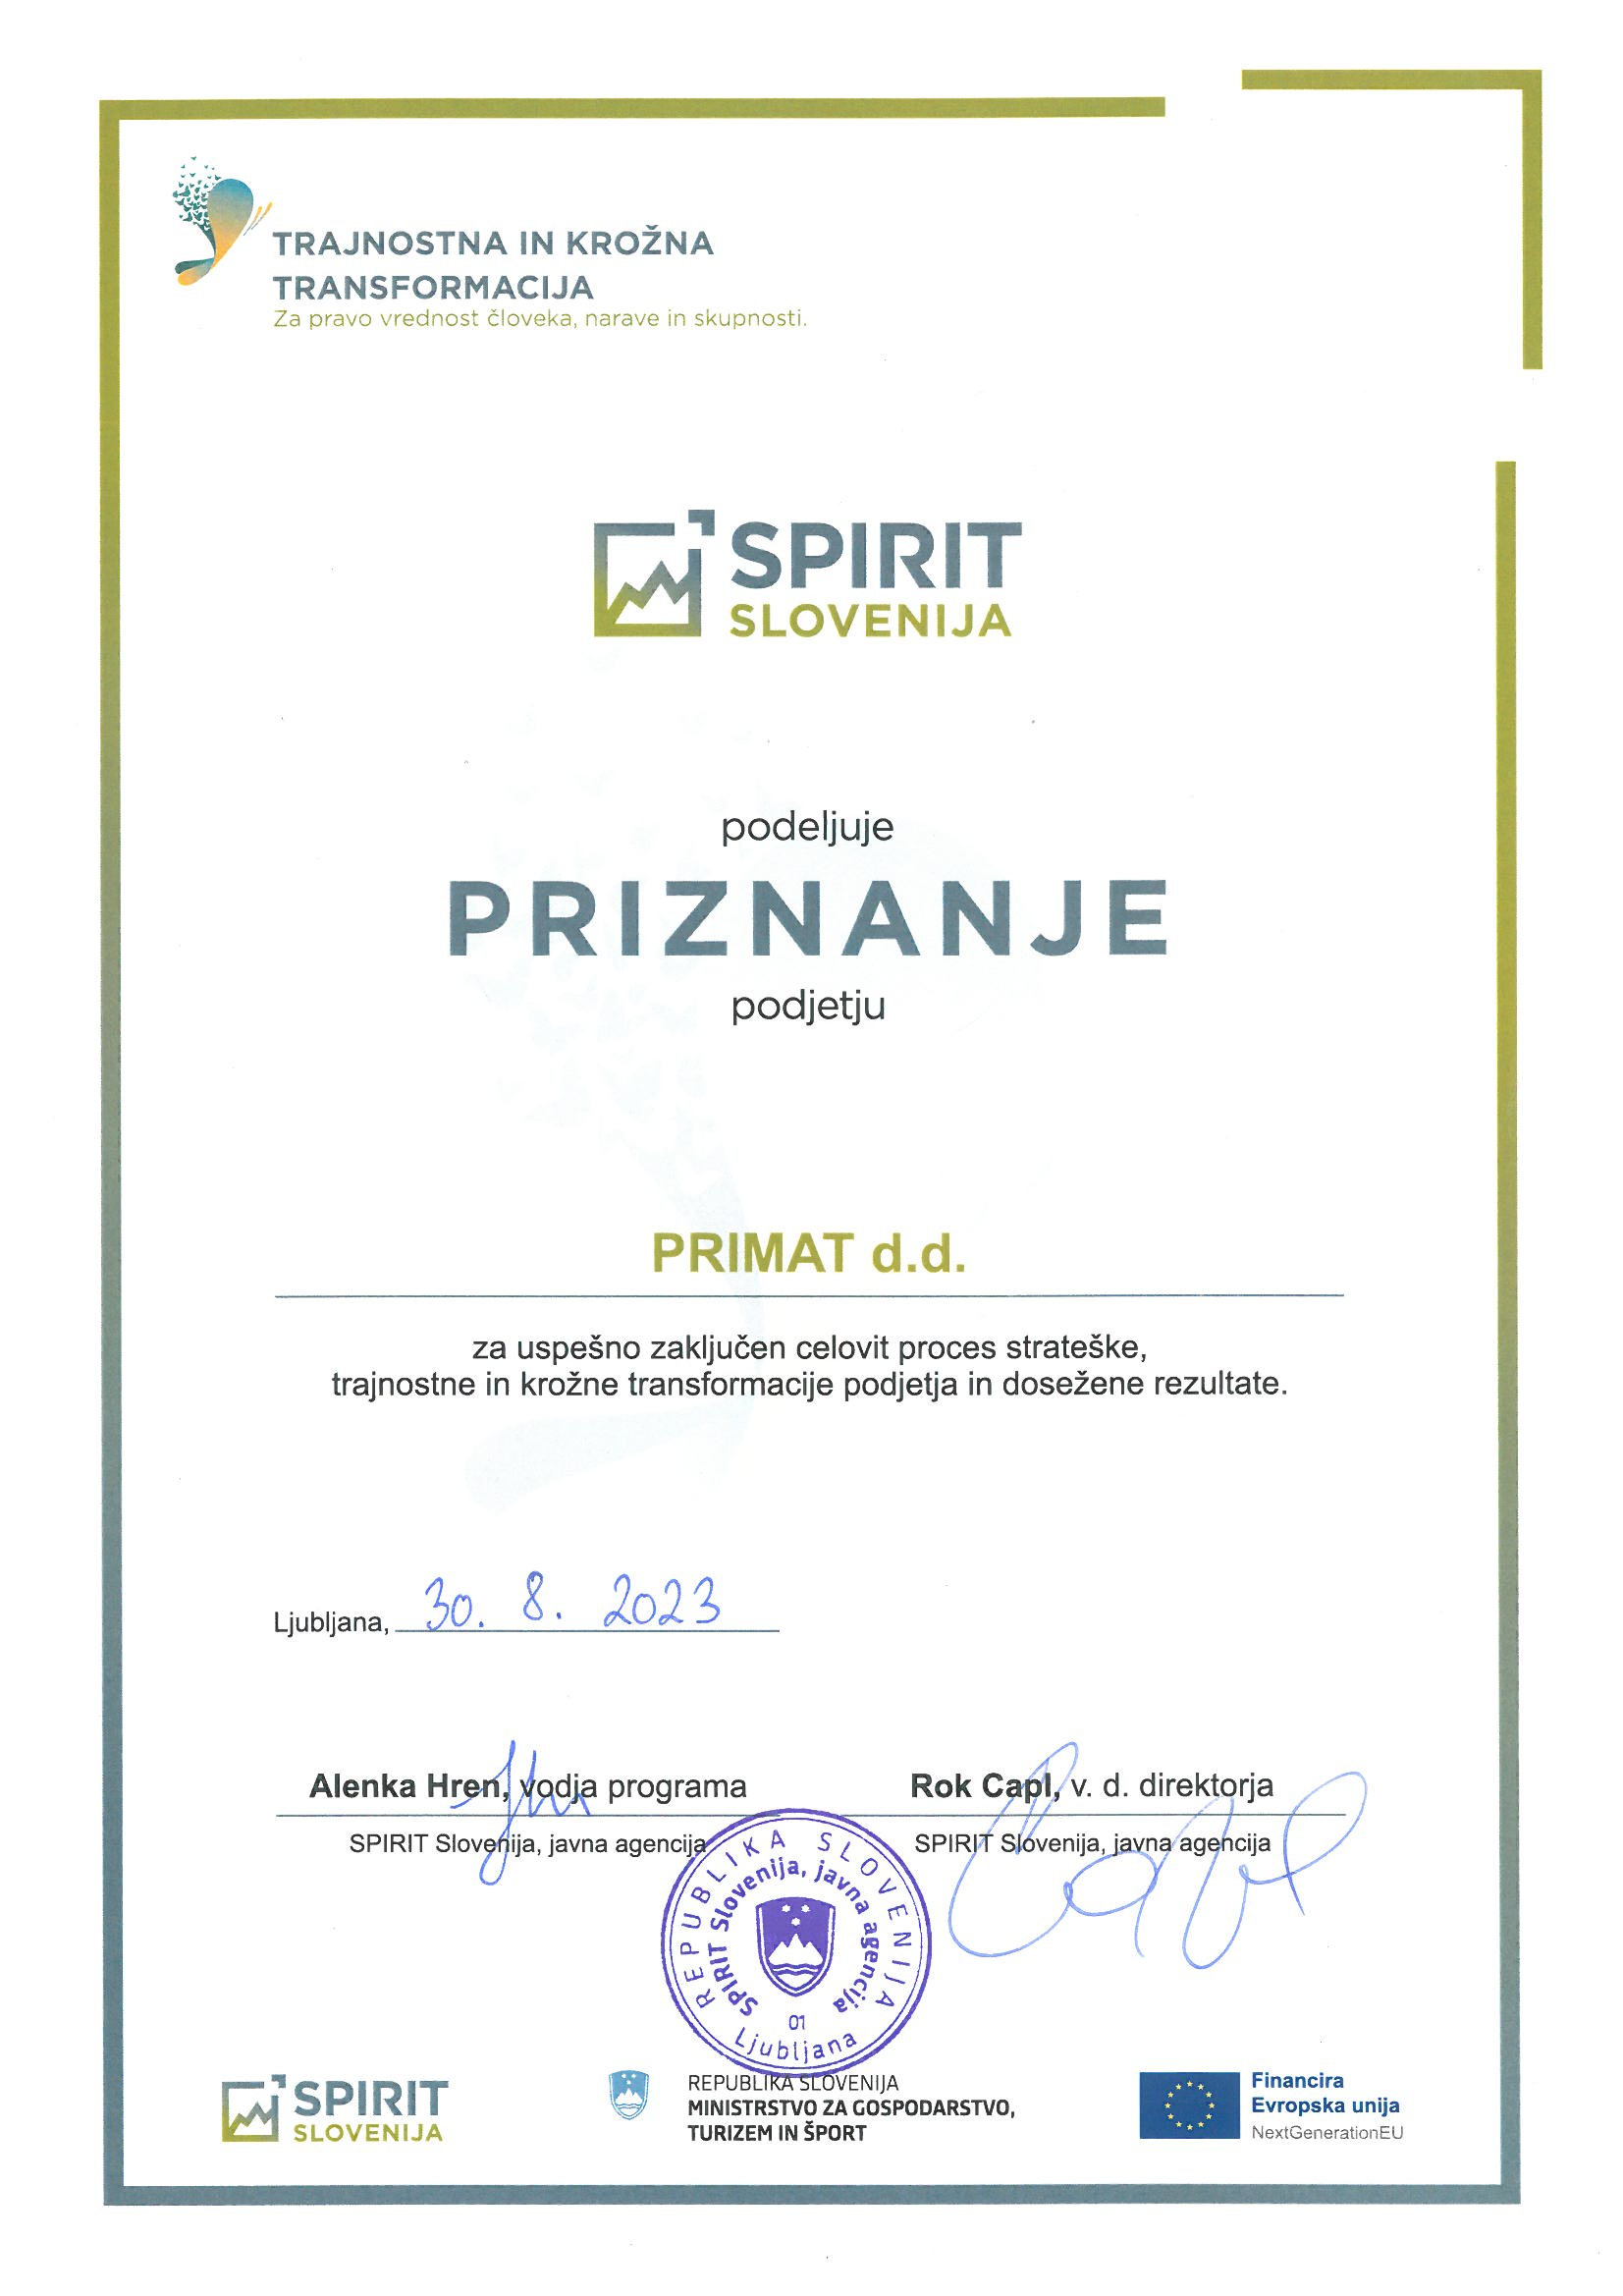 Riconoscimento SPIRIT Slovenia